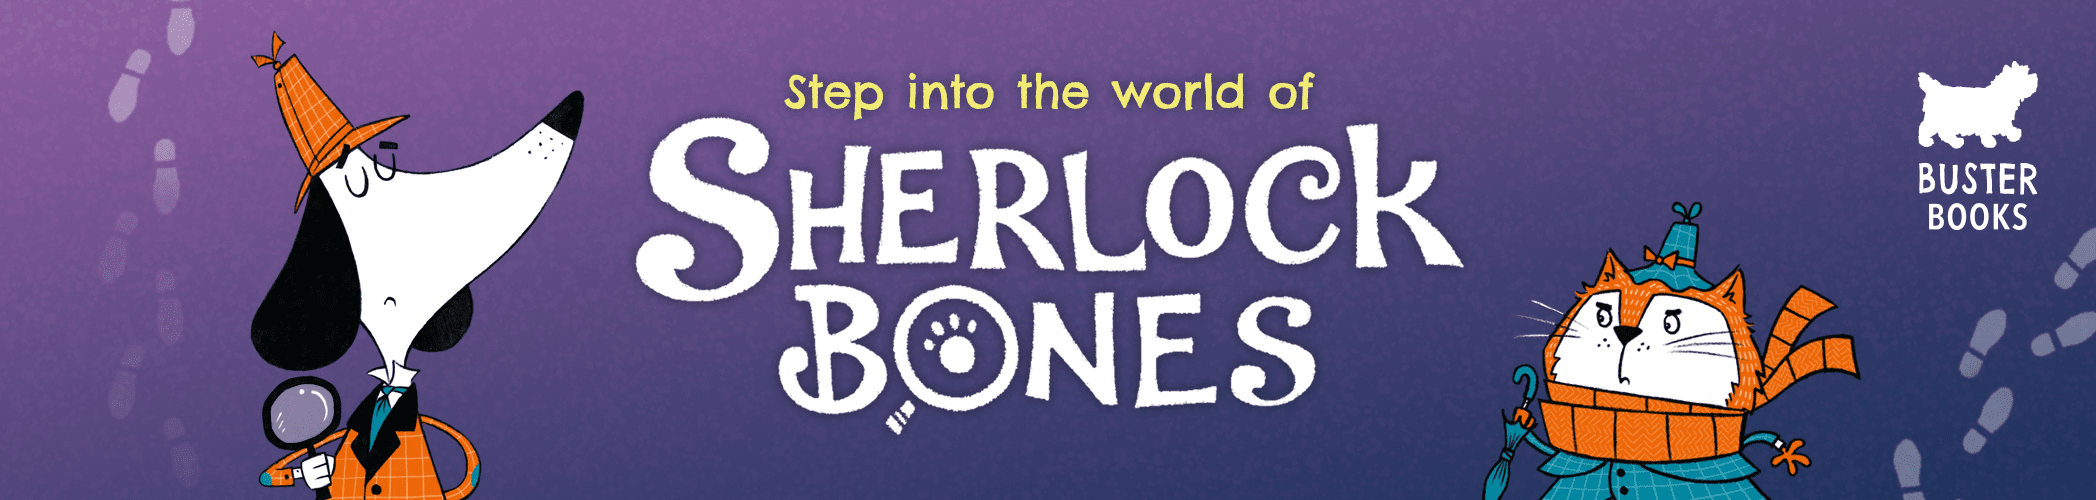 Sherlock Holmes for Kids - Step into the world of Sherlock bones 